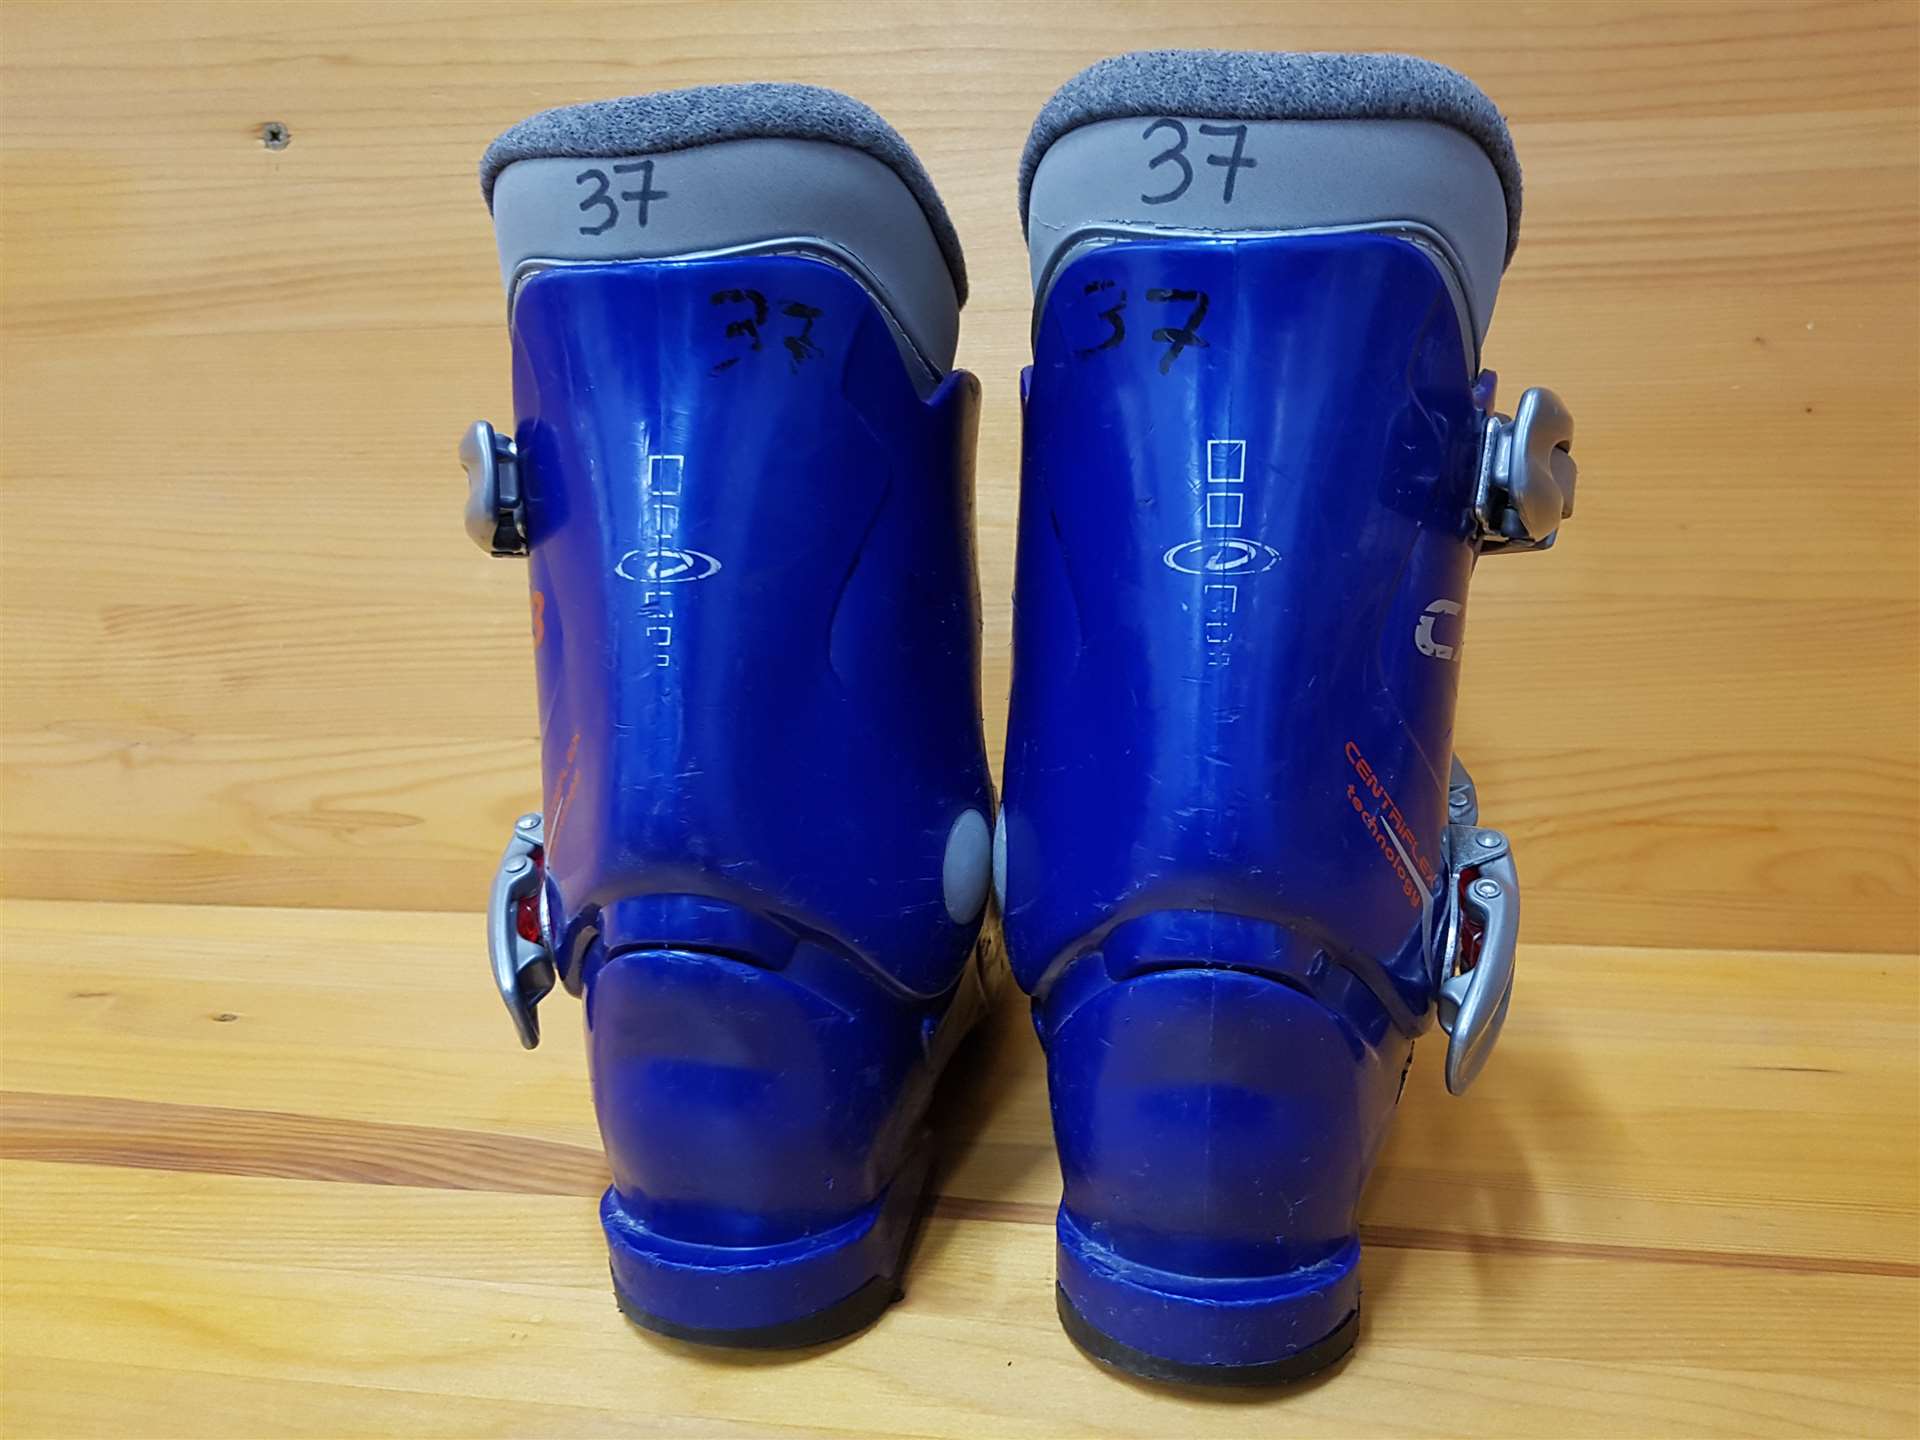 Bazárové lyžařské boty Dalbello Equipe CX 3